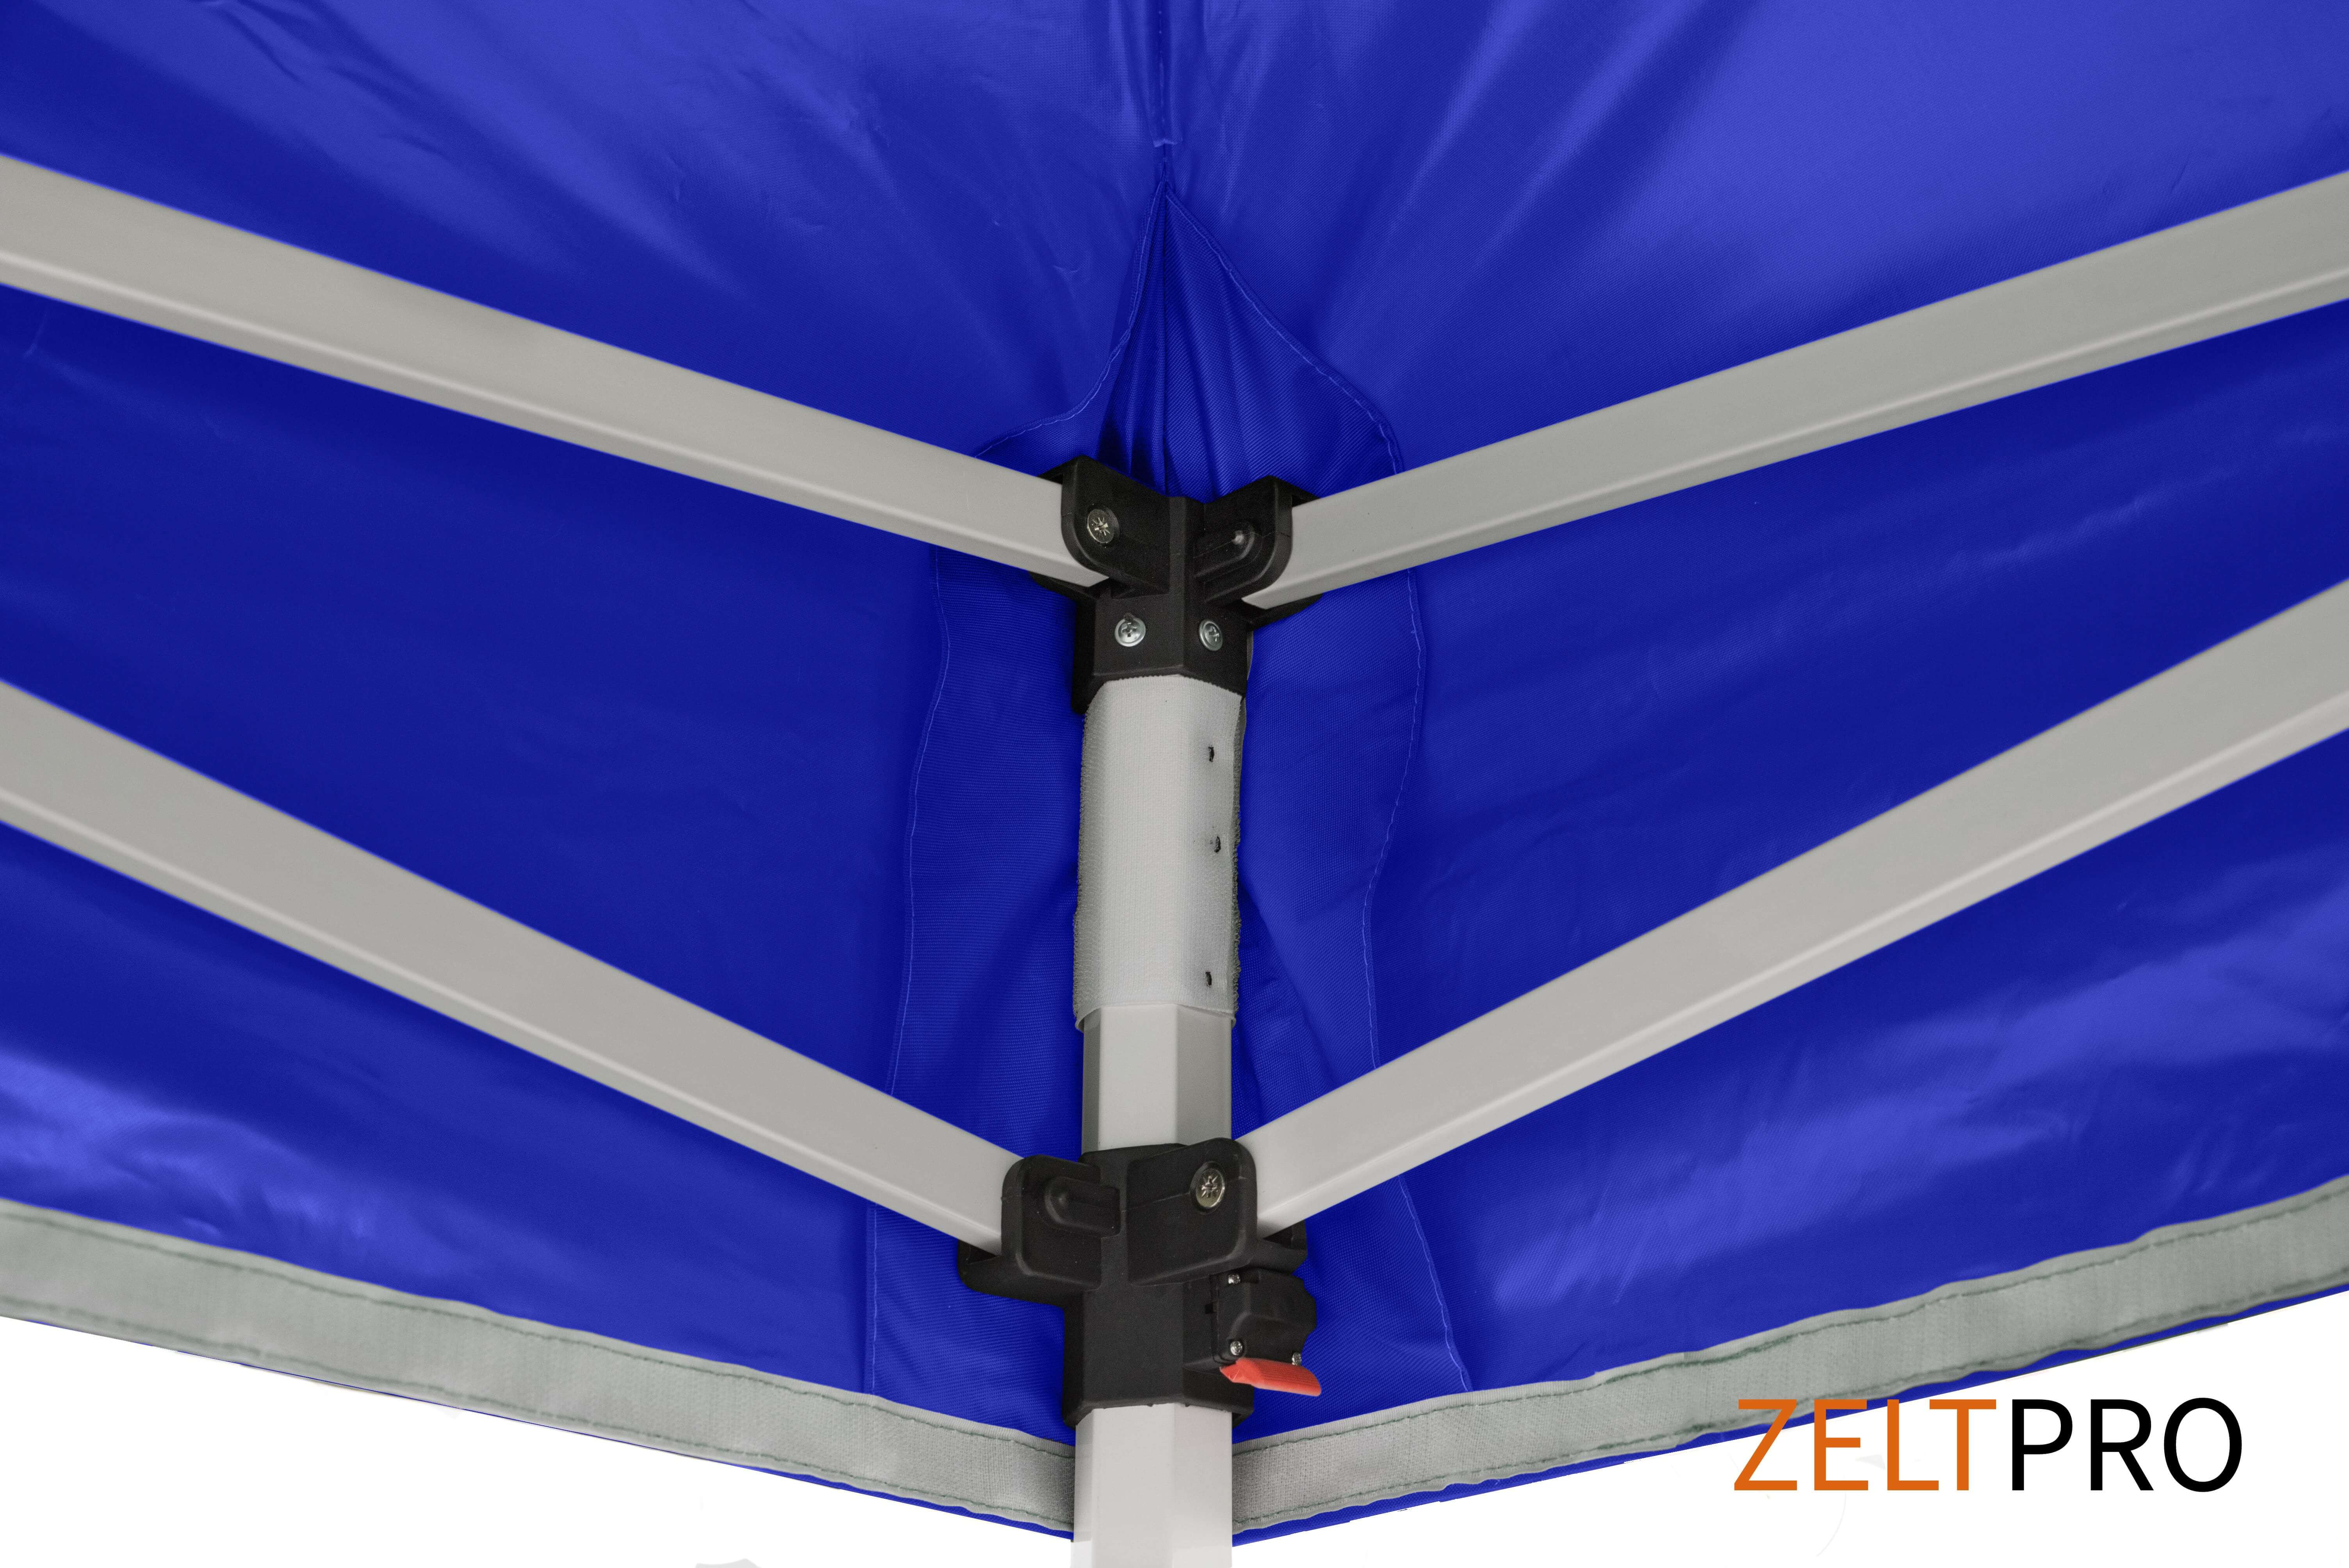 Pop-up telk 2x2 sinine Zeltpro PROFRAME